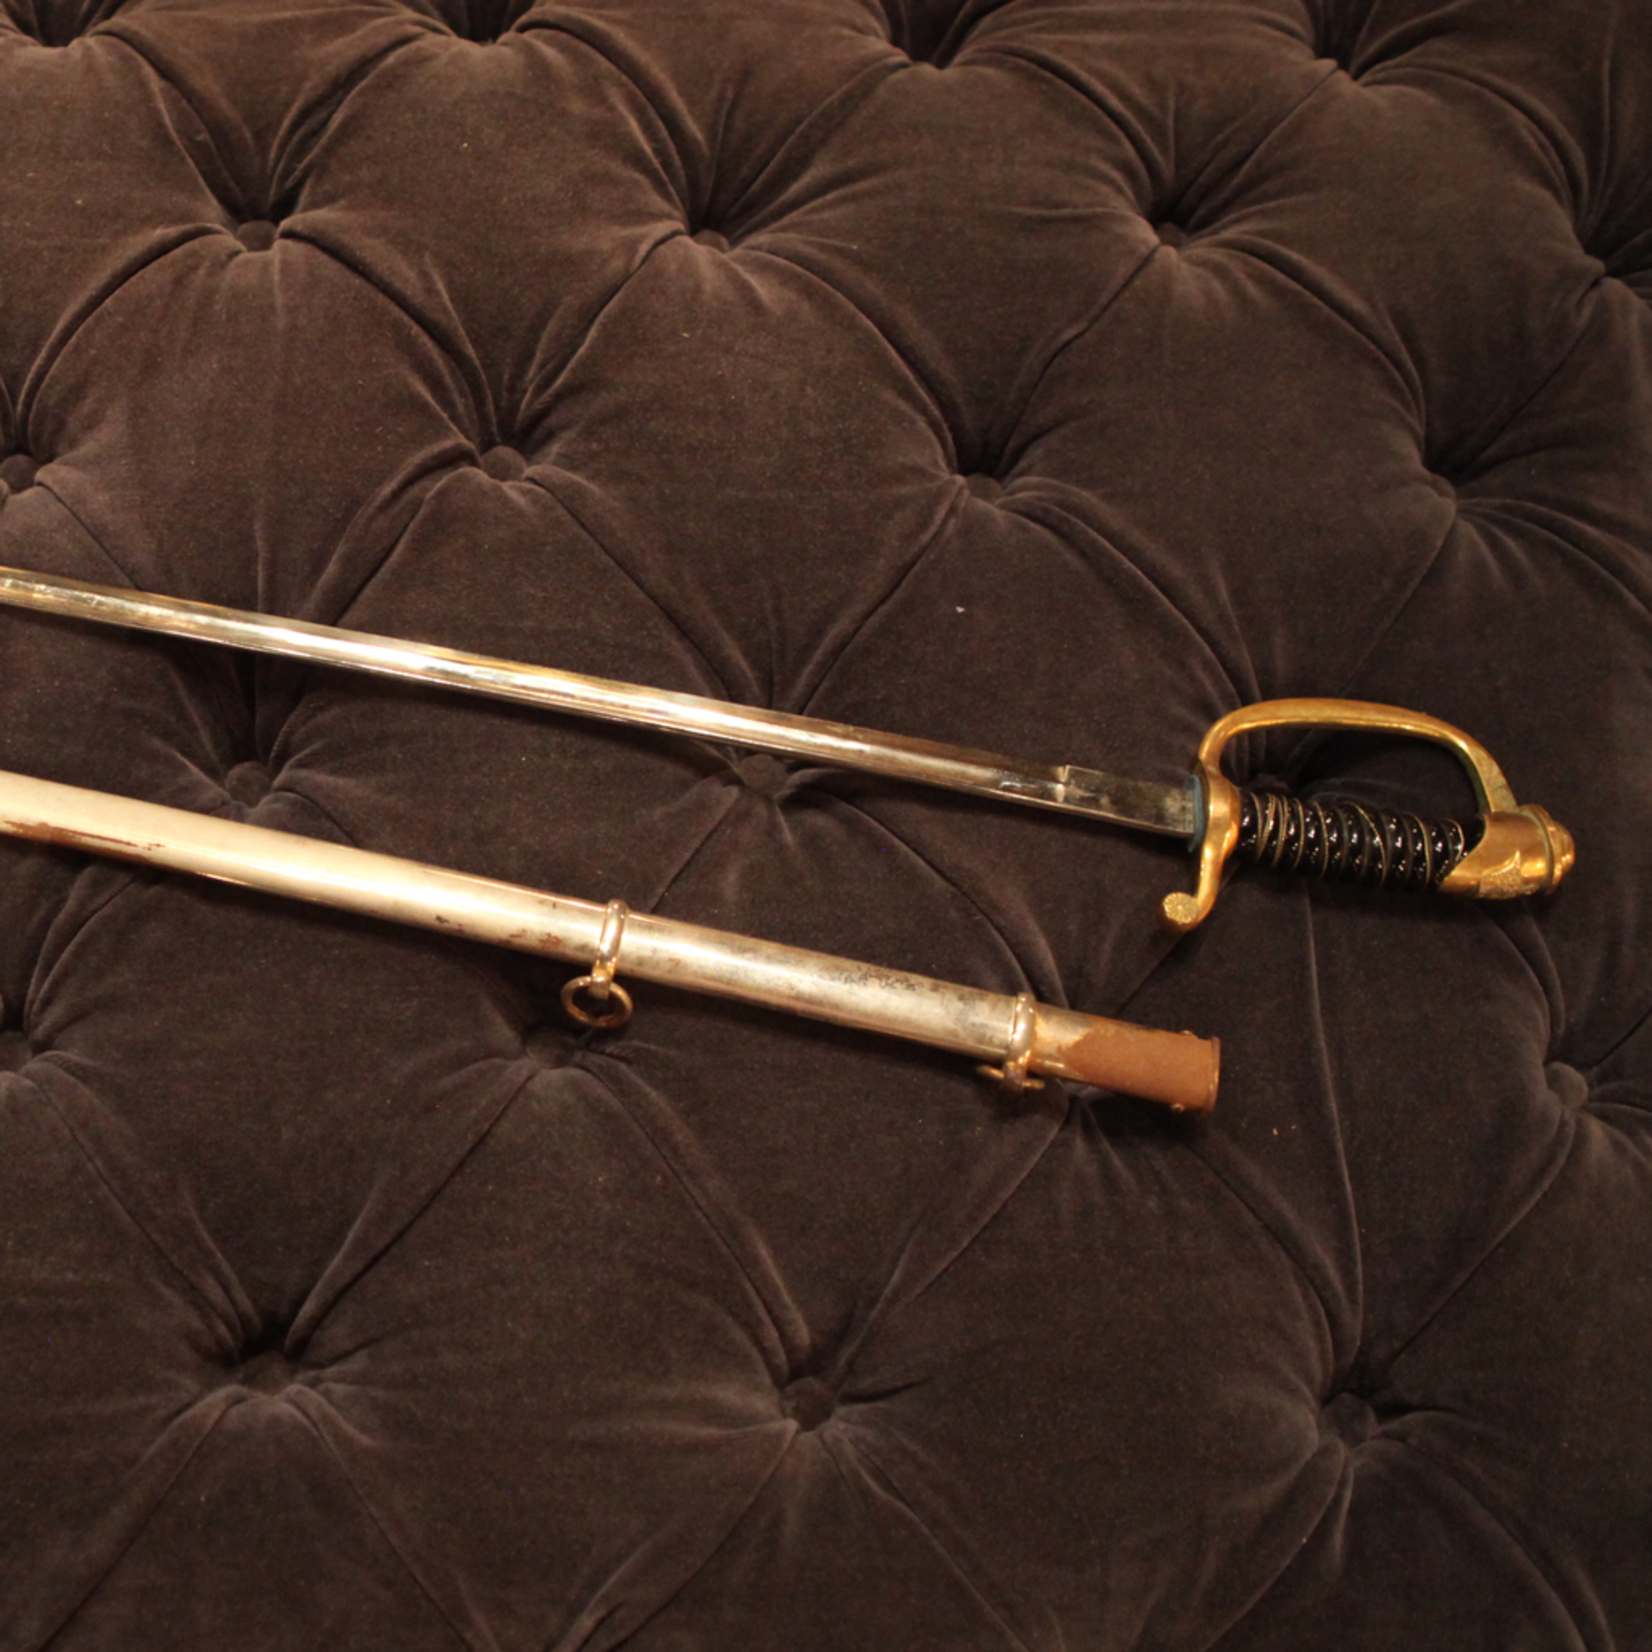 TAJHOME Antique Sword